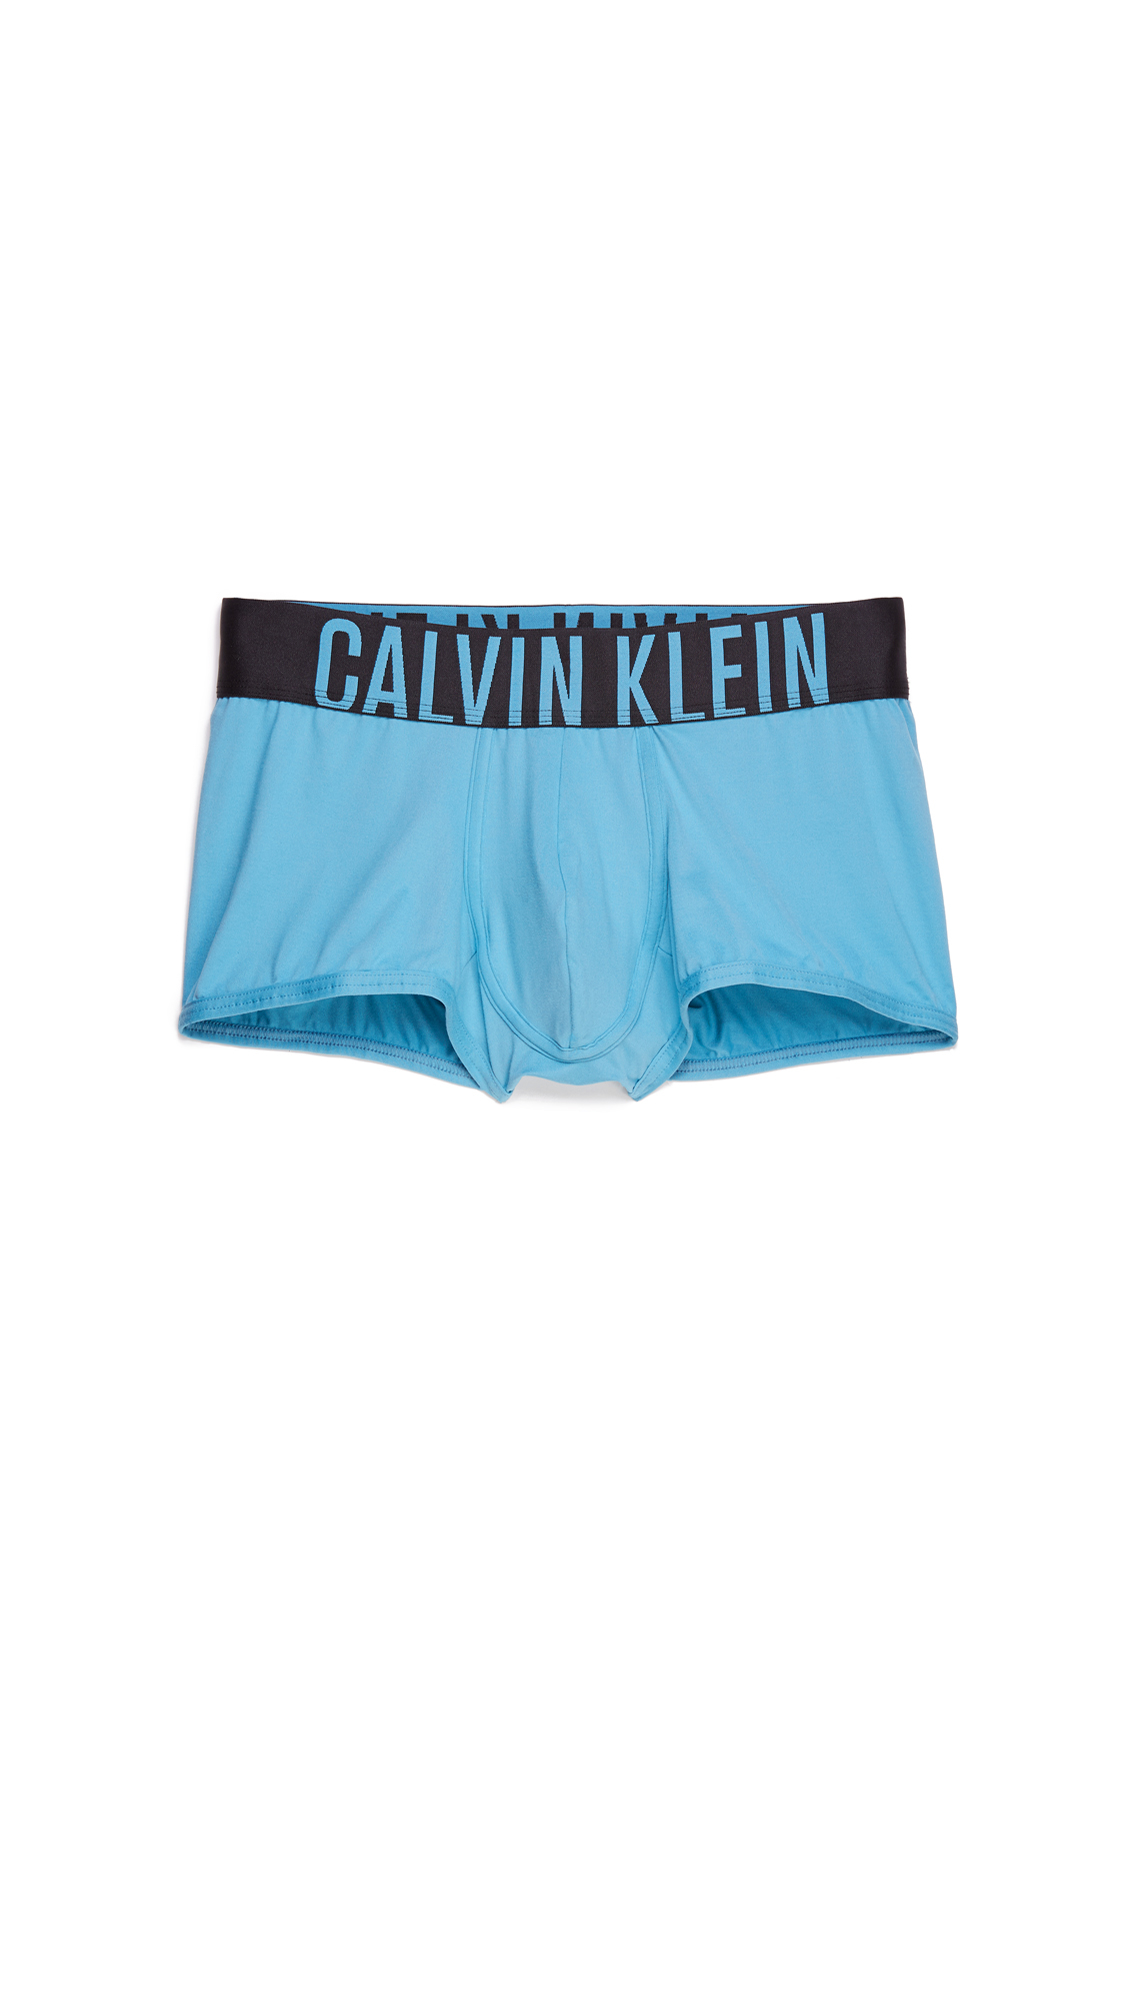 Calvin klein Boxer in Blue for Men - Save 28% | Lyst